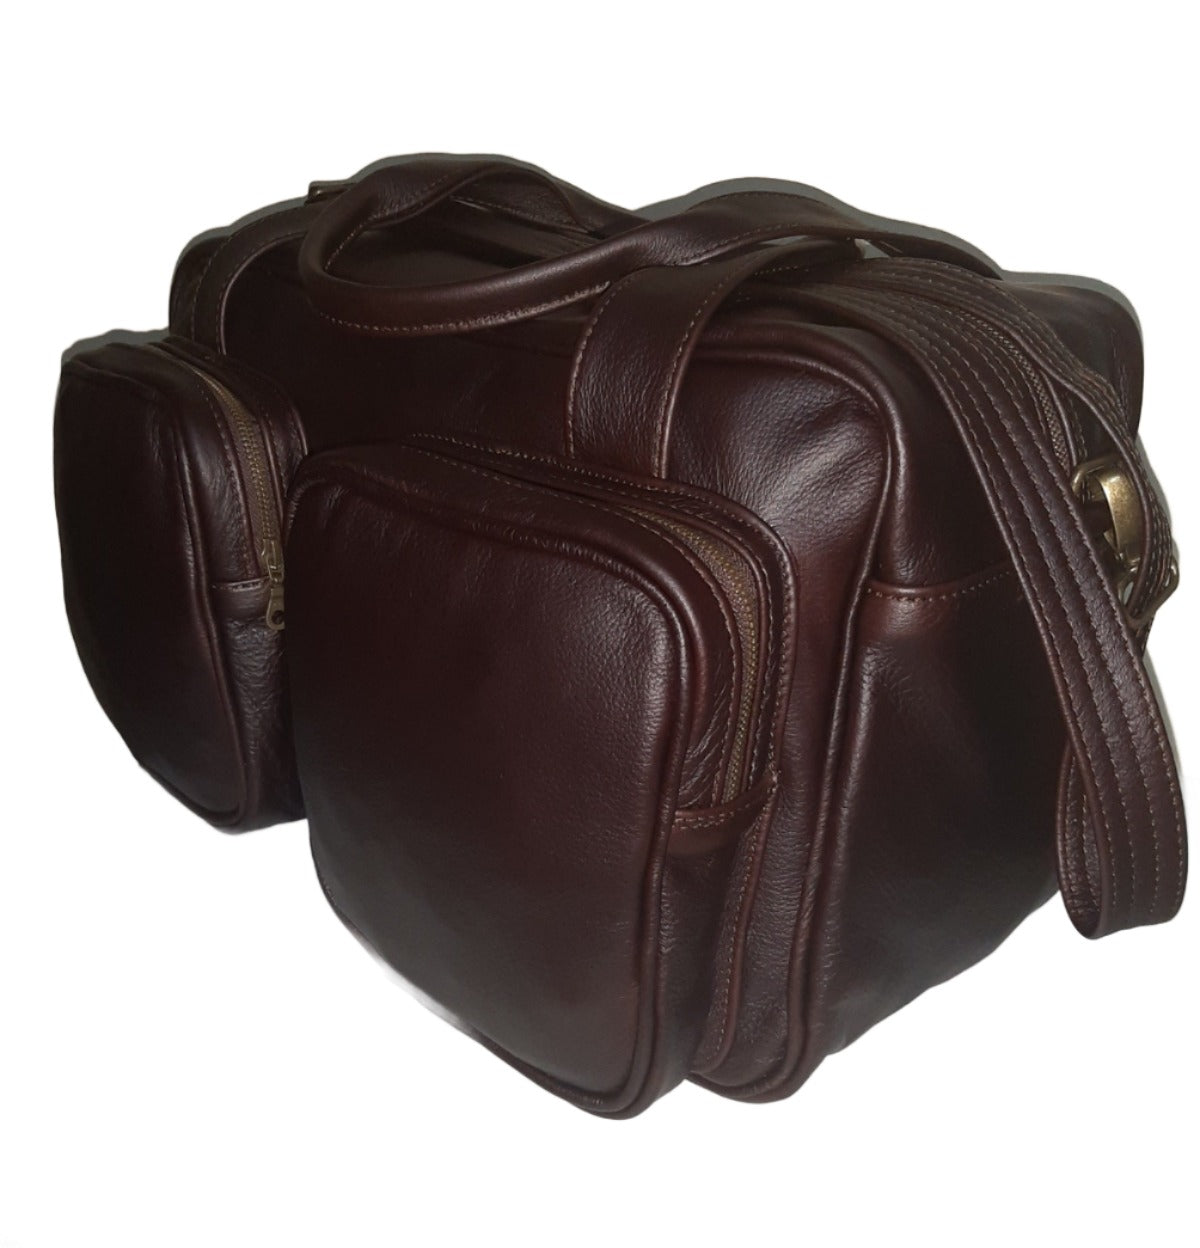 Centurion travel bags - cape Masai leather 